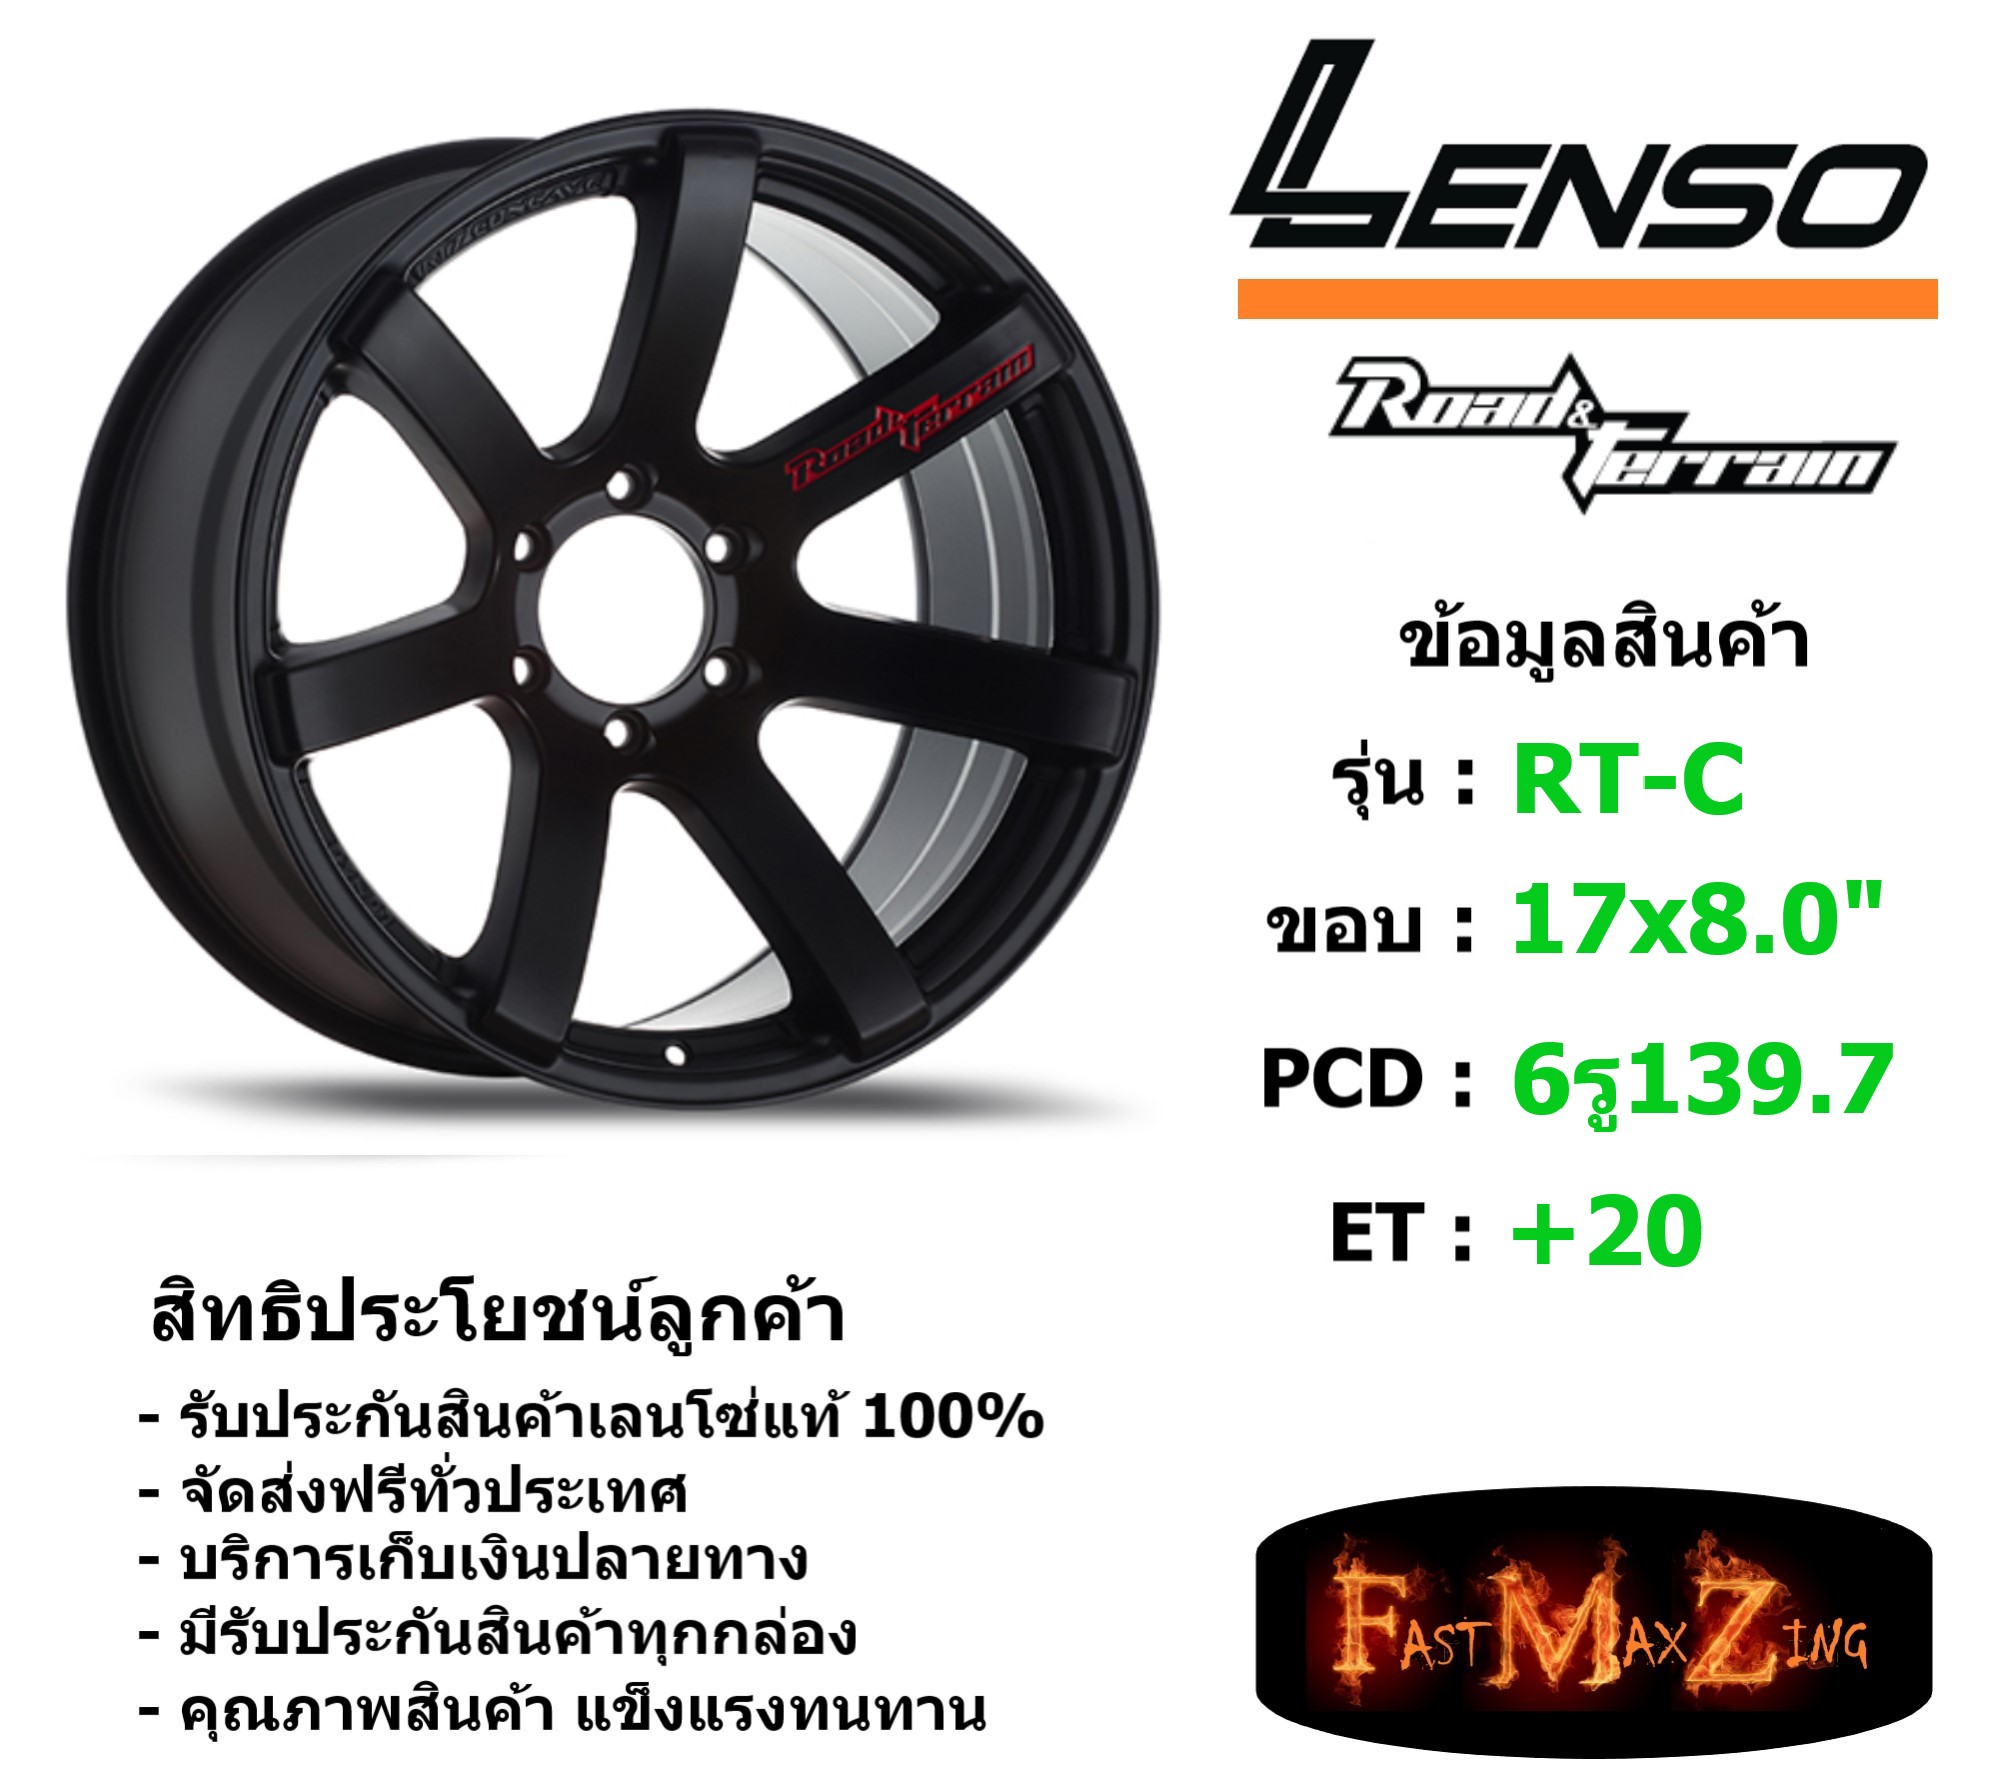 Lenso Wheel Roadu0026Terrain-C ขอบ 17x8.0 6รู139.7 ET+20 สีMB แม็กเลนโซ่  ล้อแม็ก เลนโซ่ lenso17 แม็กรถยนต์ขอบ17 | Lazada.co.th